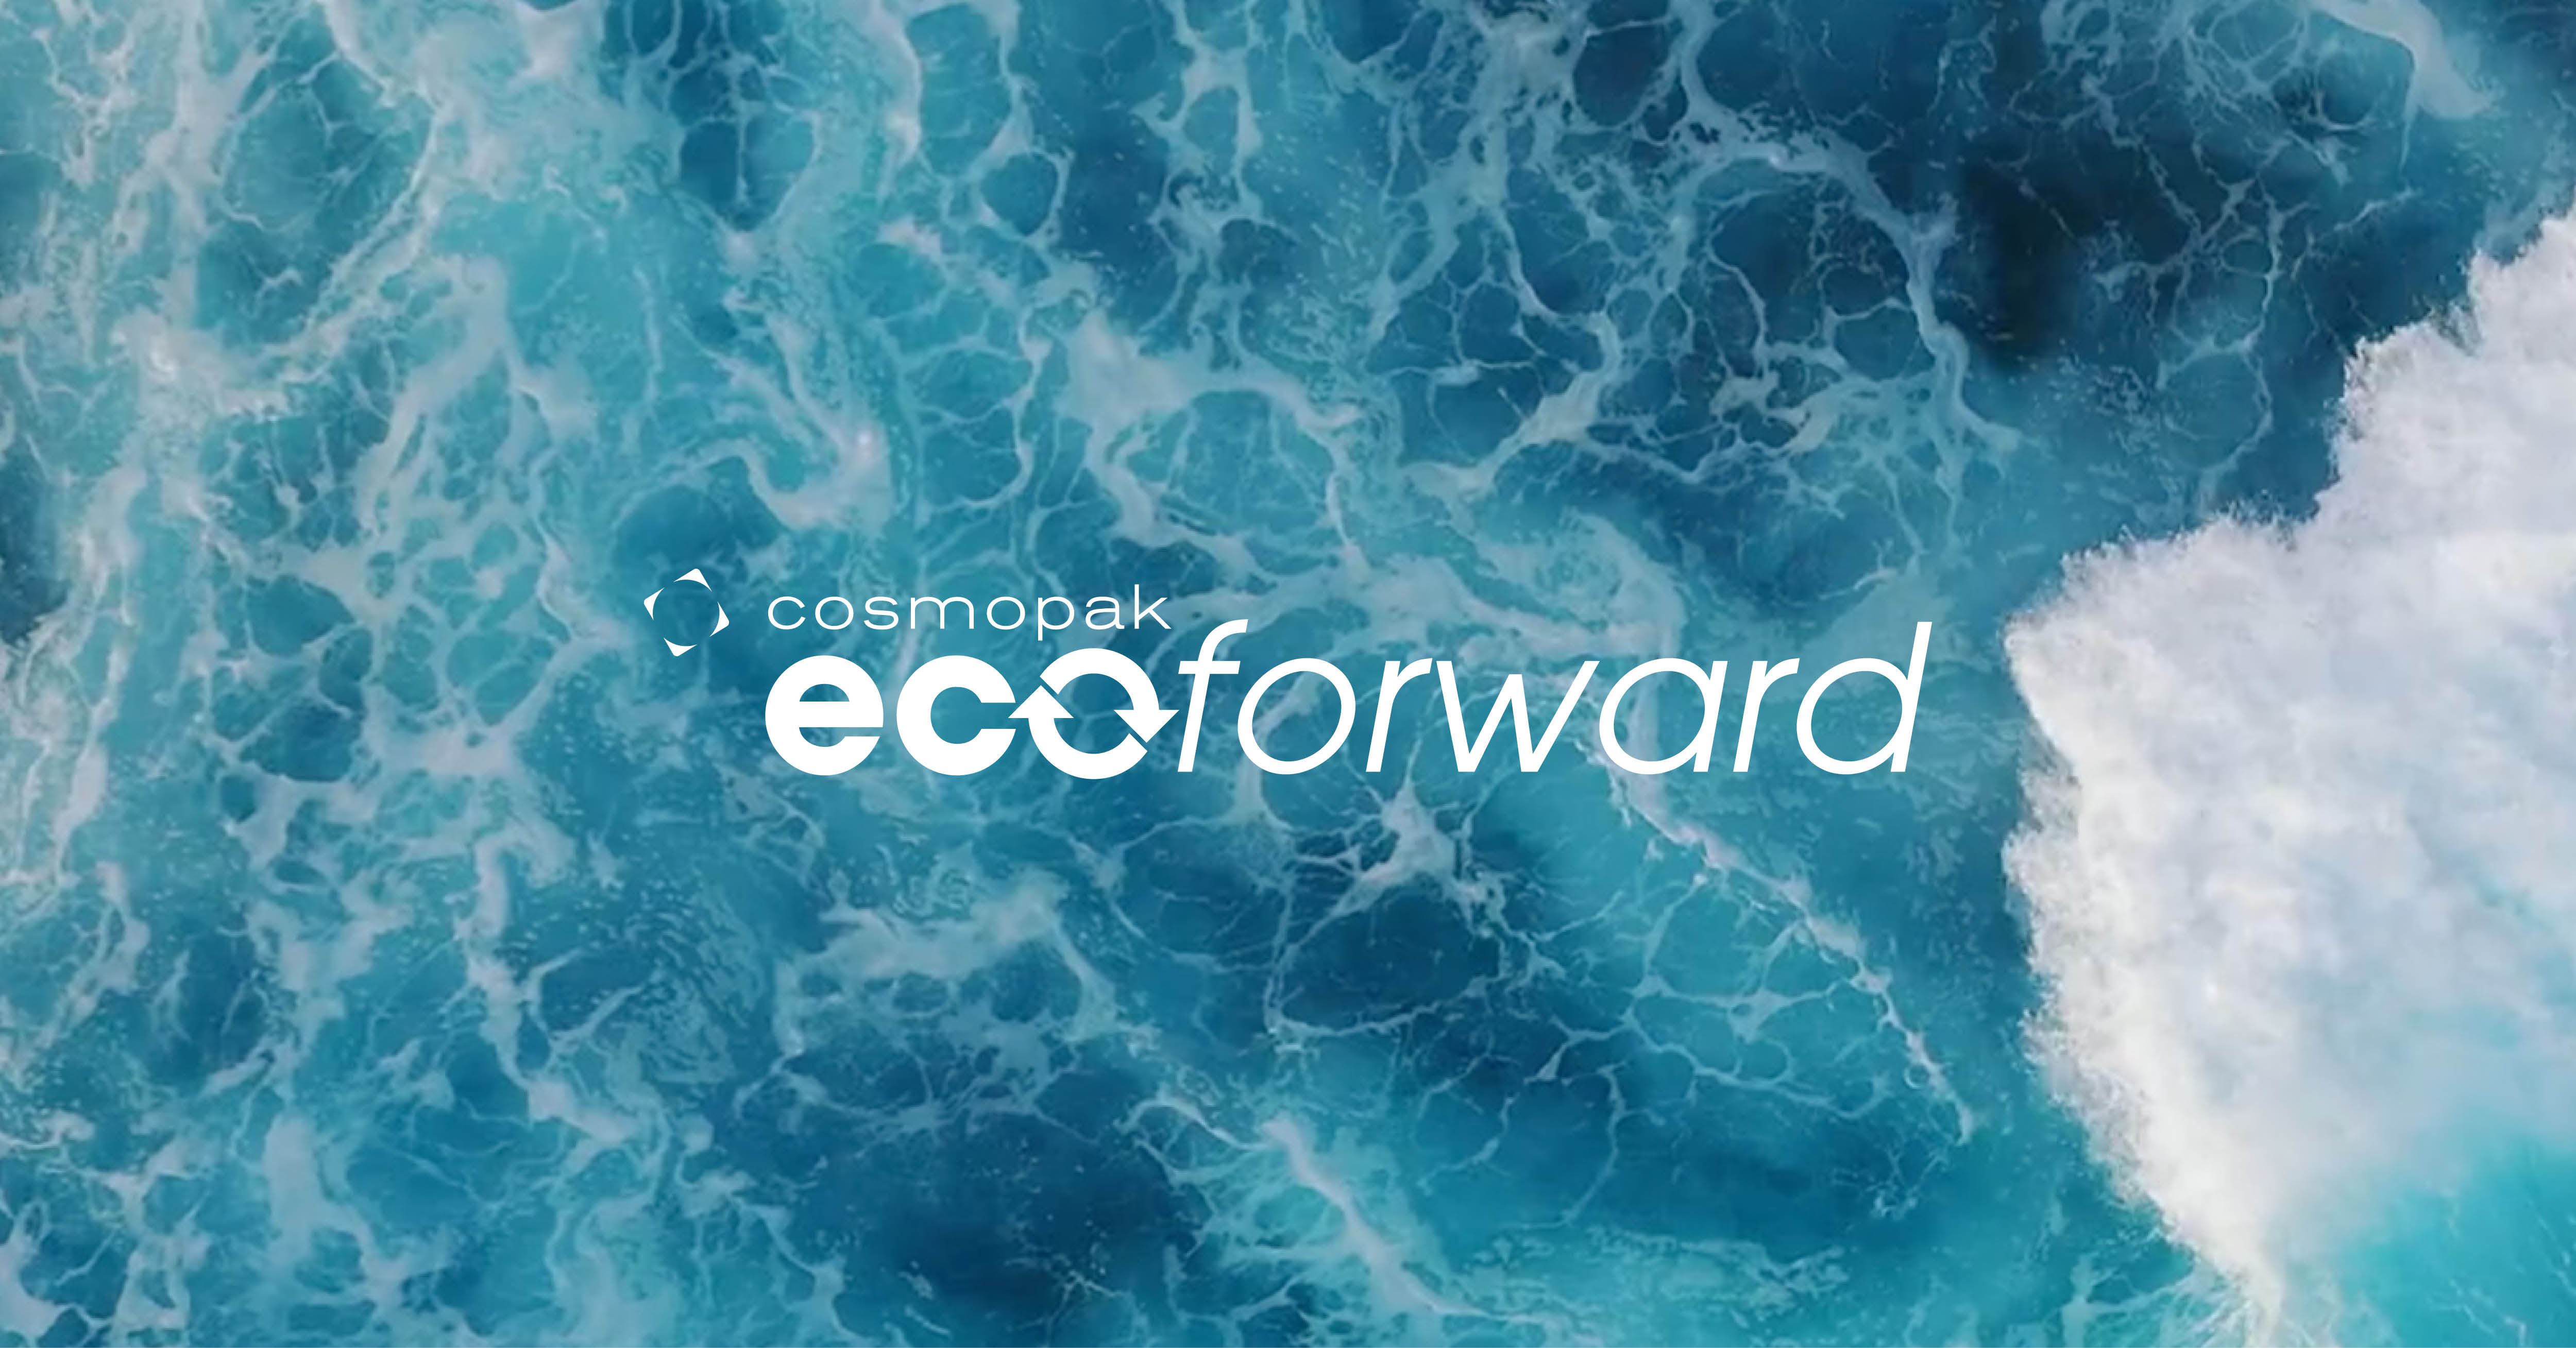 cosmopak launches ecoforward